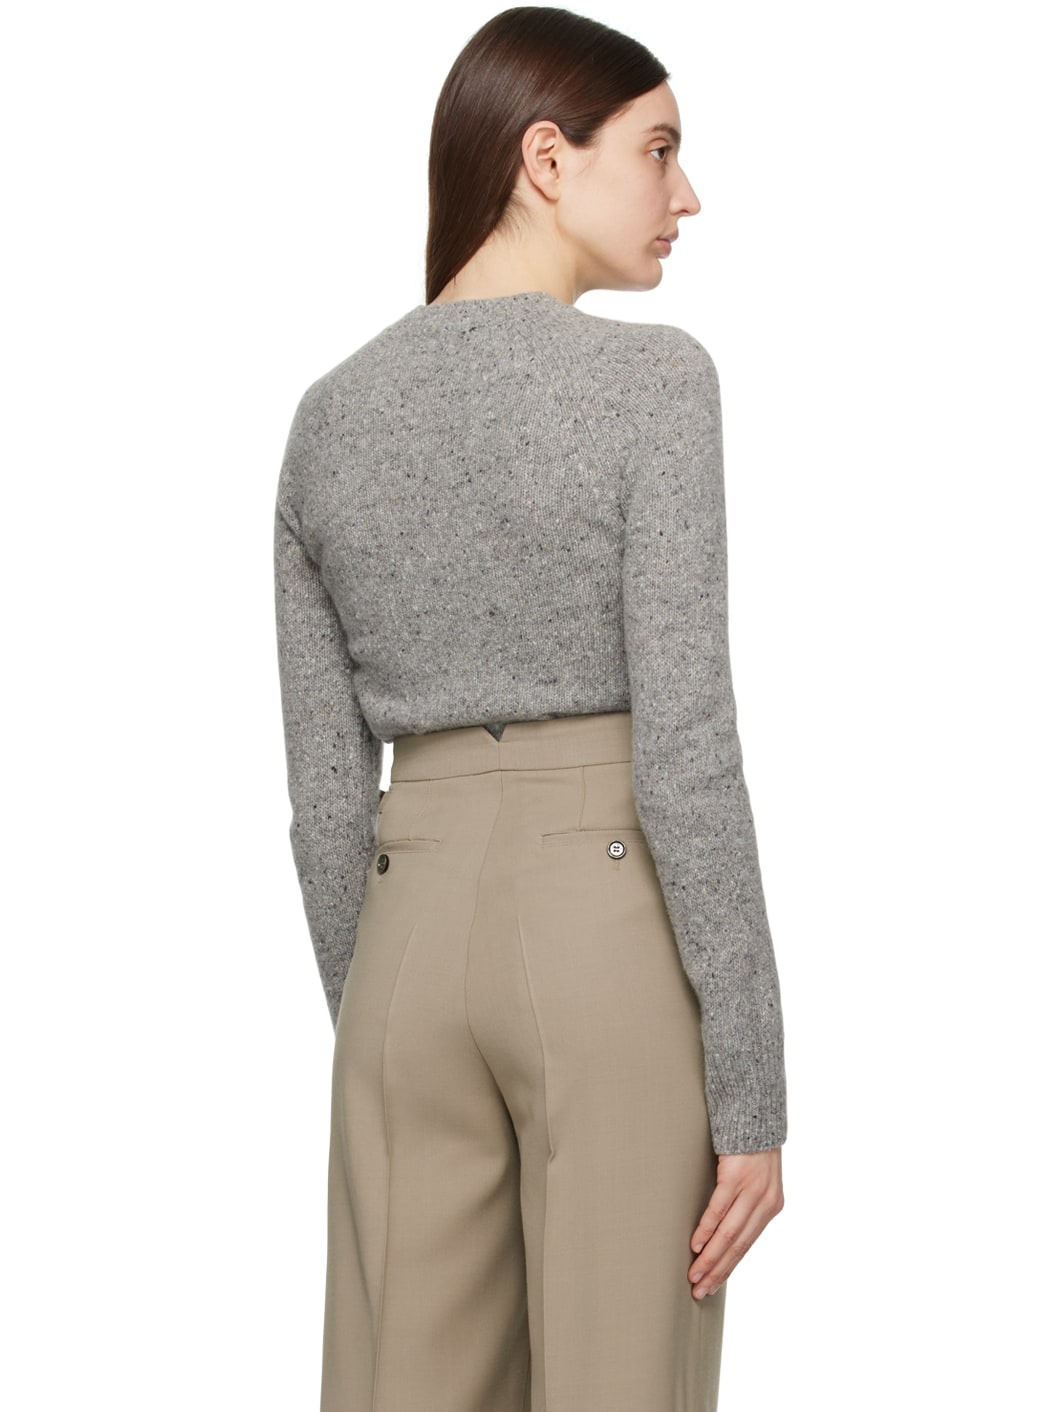 Gray Raglan Sweater - 3